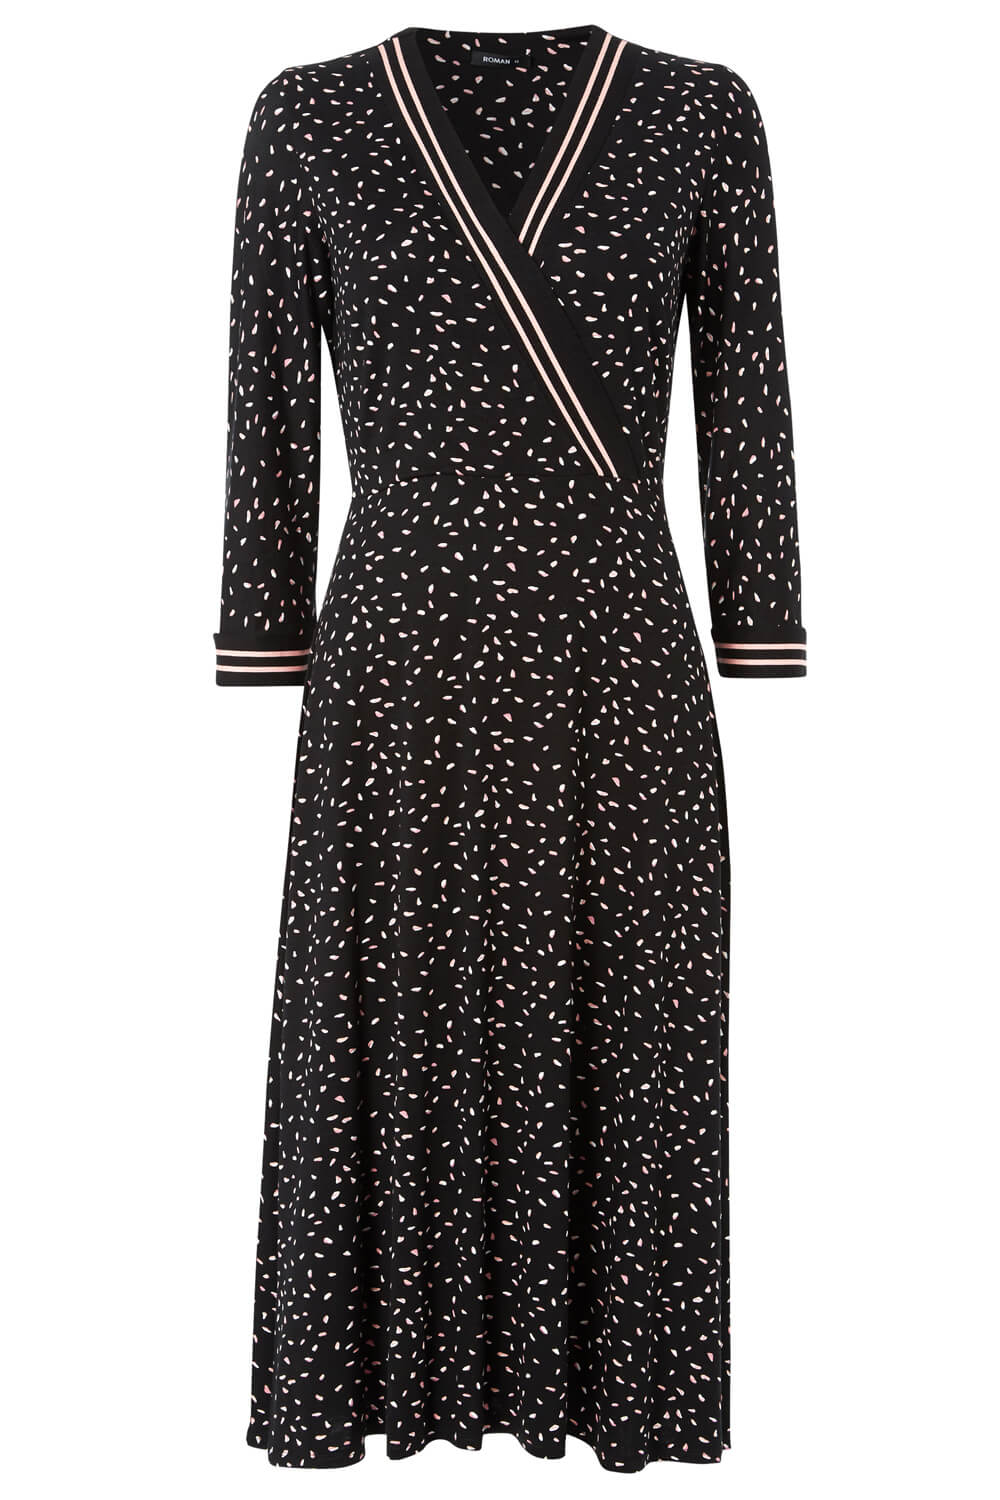 Black Contrast Stripe Ditsy Print Midi Dress, Image 5 of 5